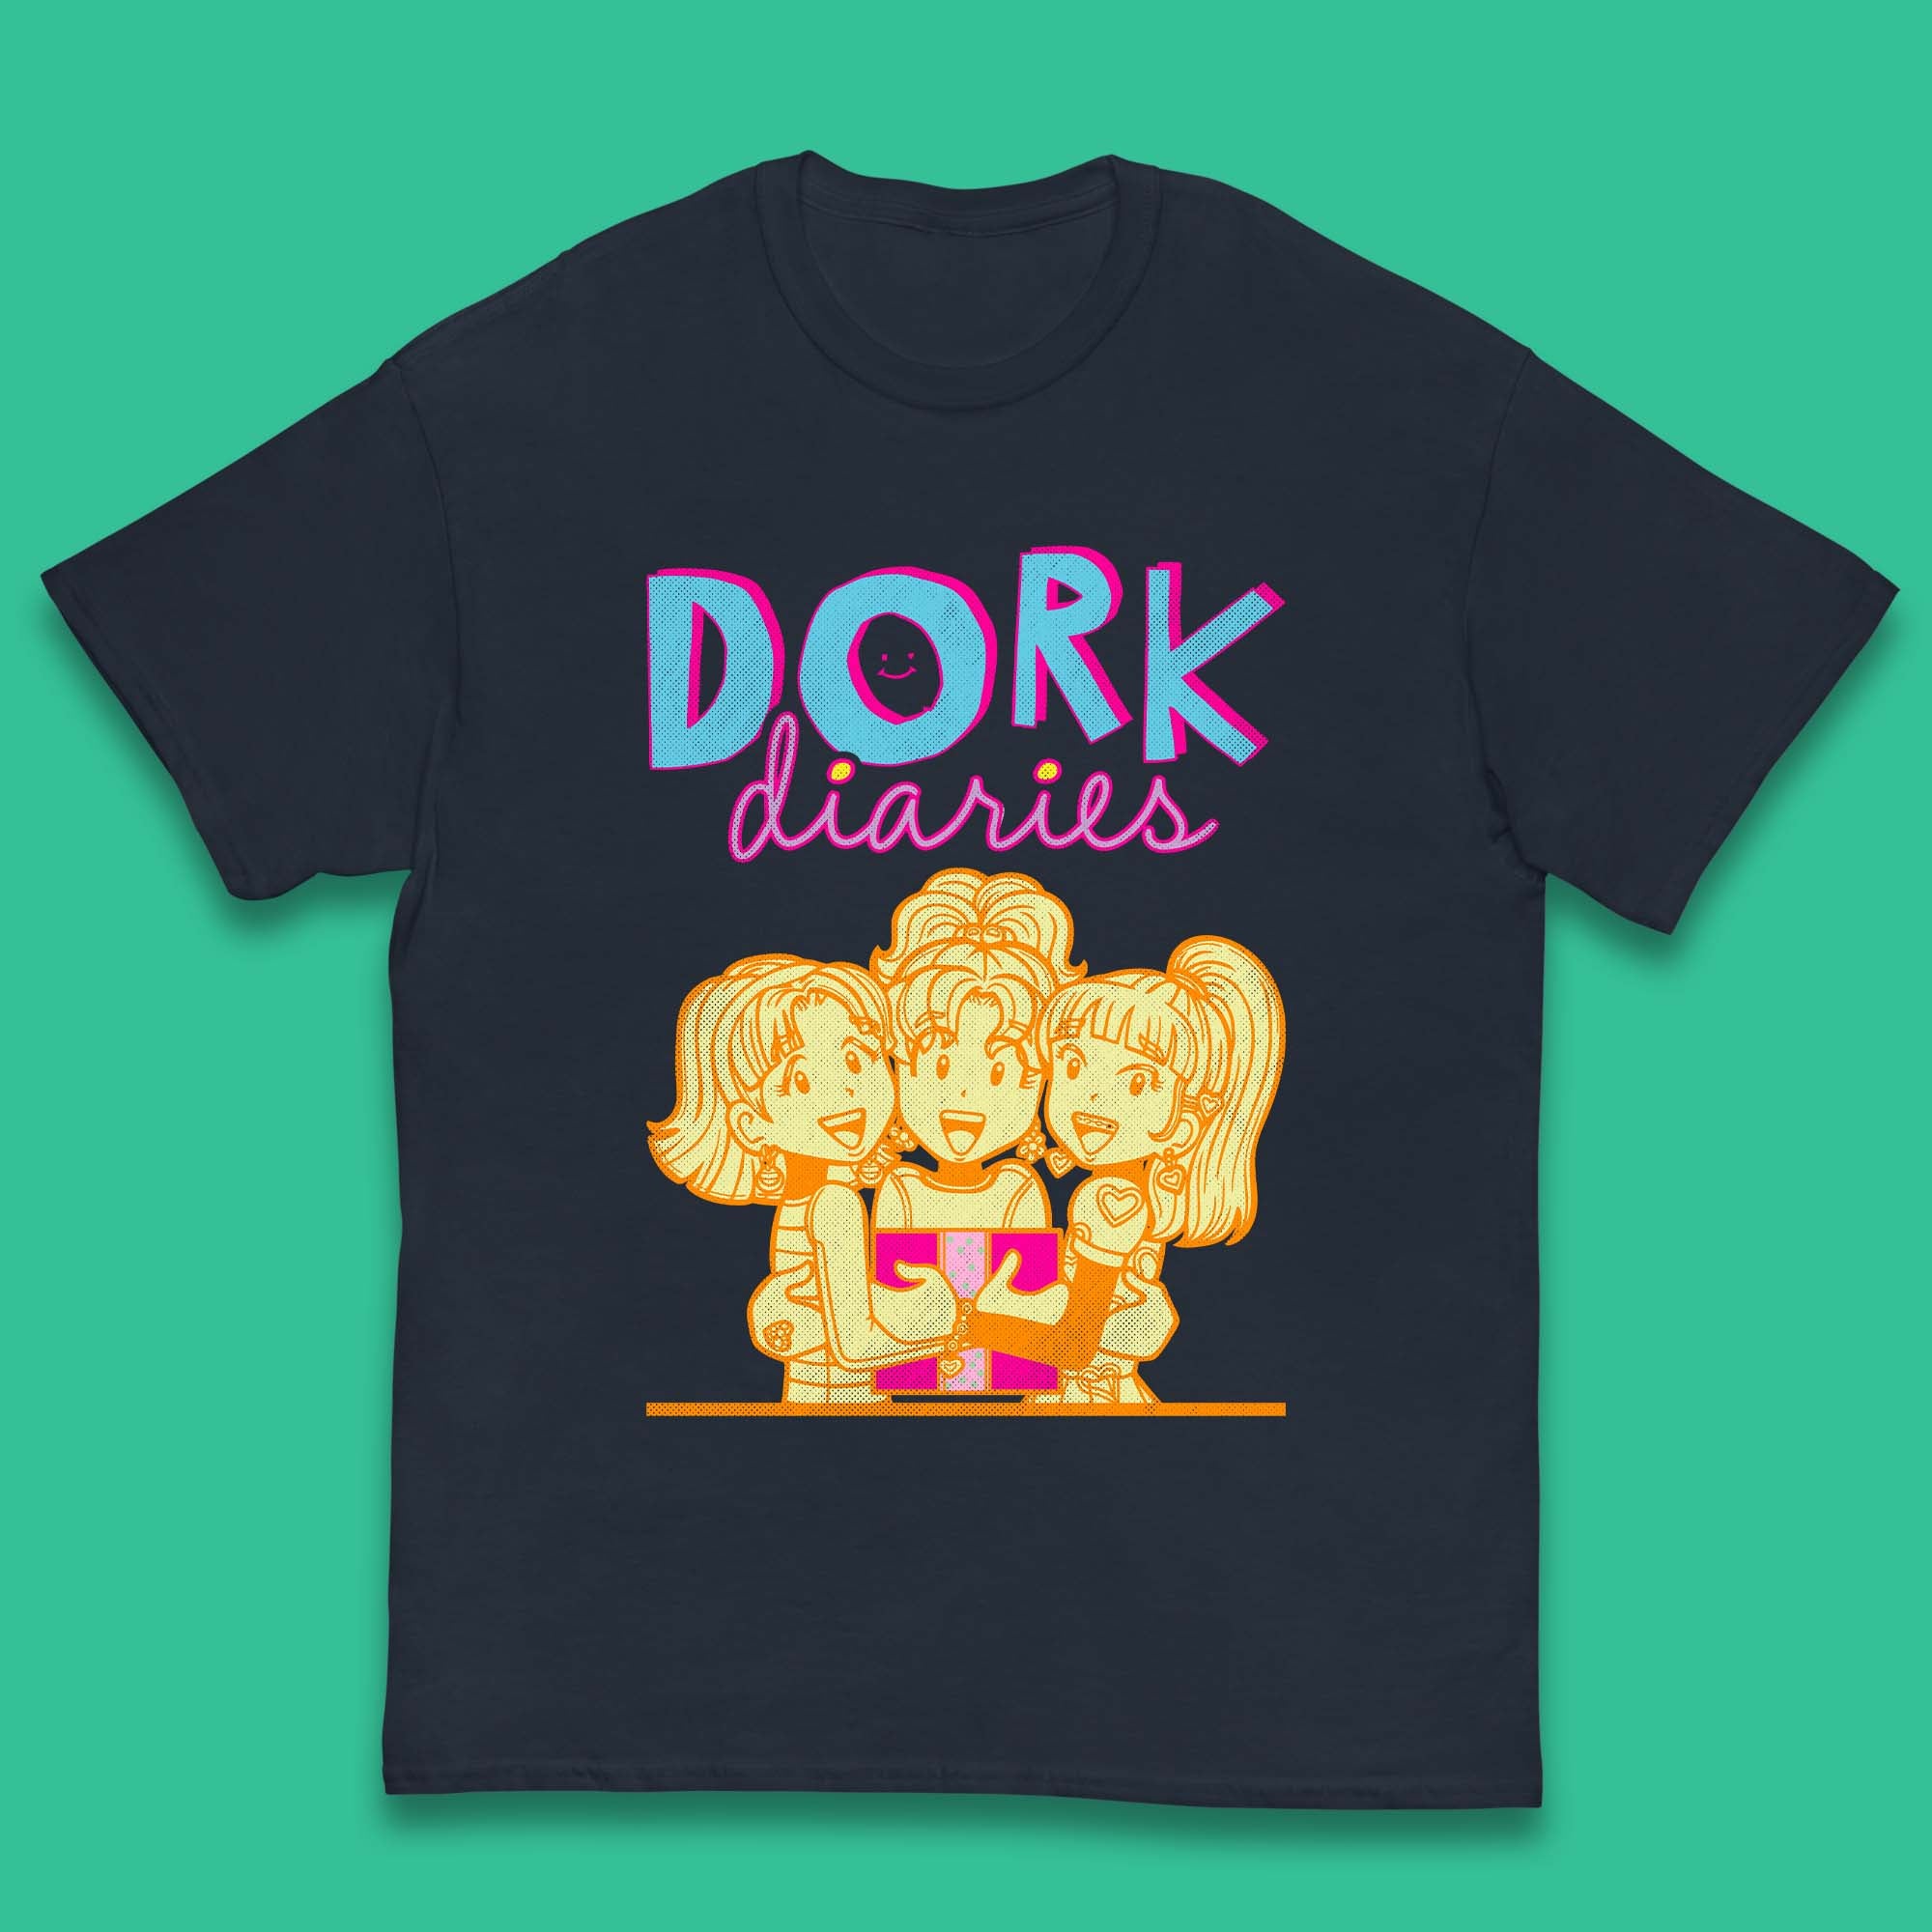 Dork Diaries Childrens Book T Shirt